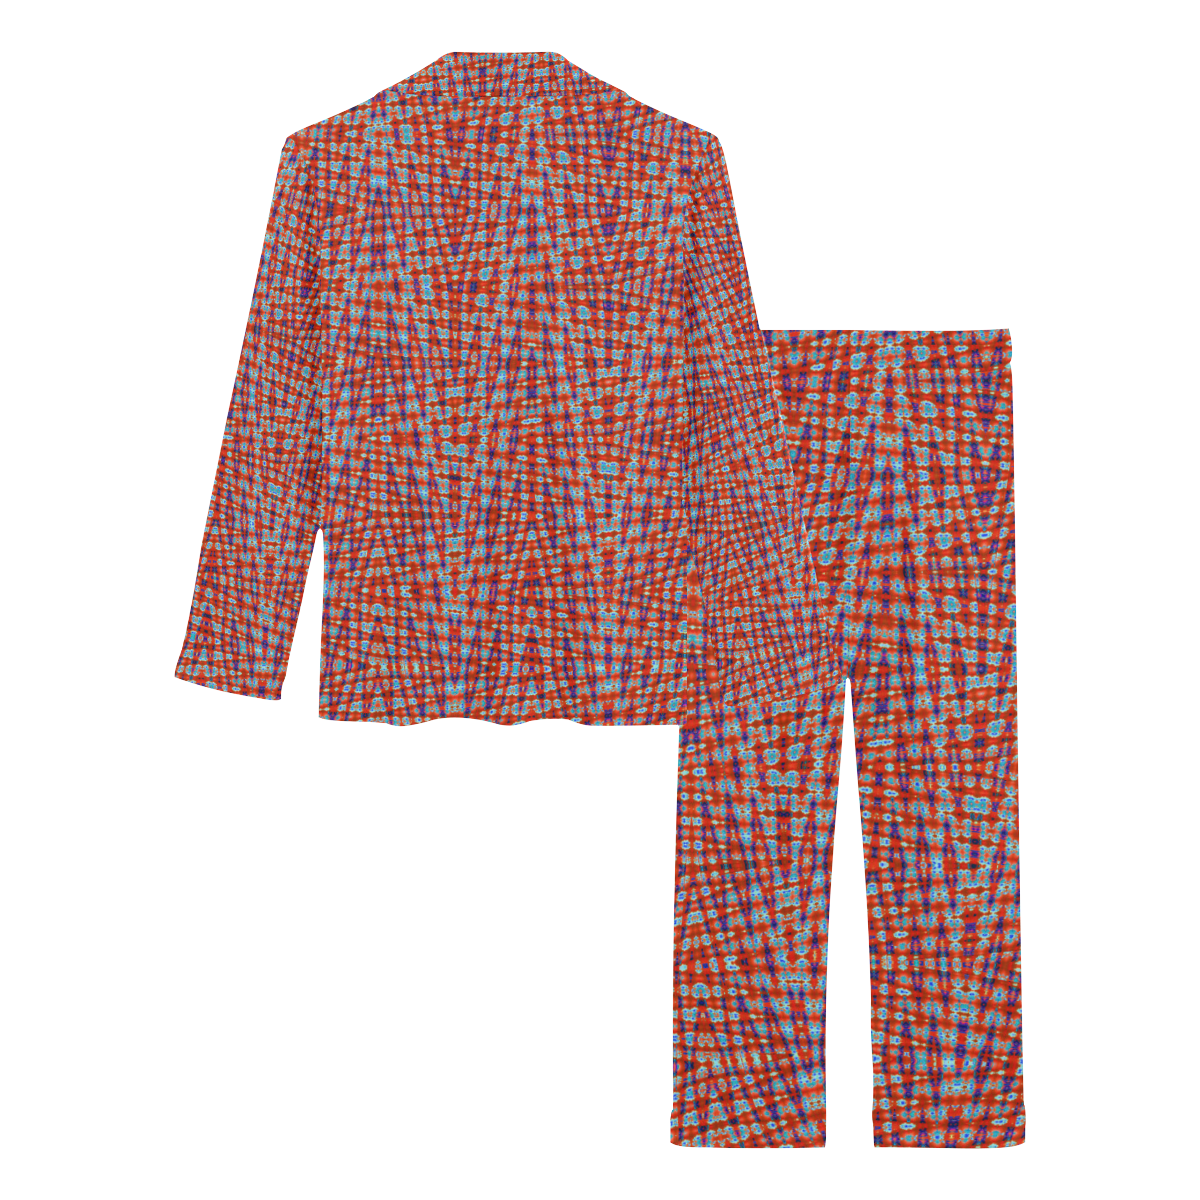 PJ EXPRESSION Women's Long Pajama Set